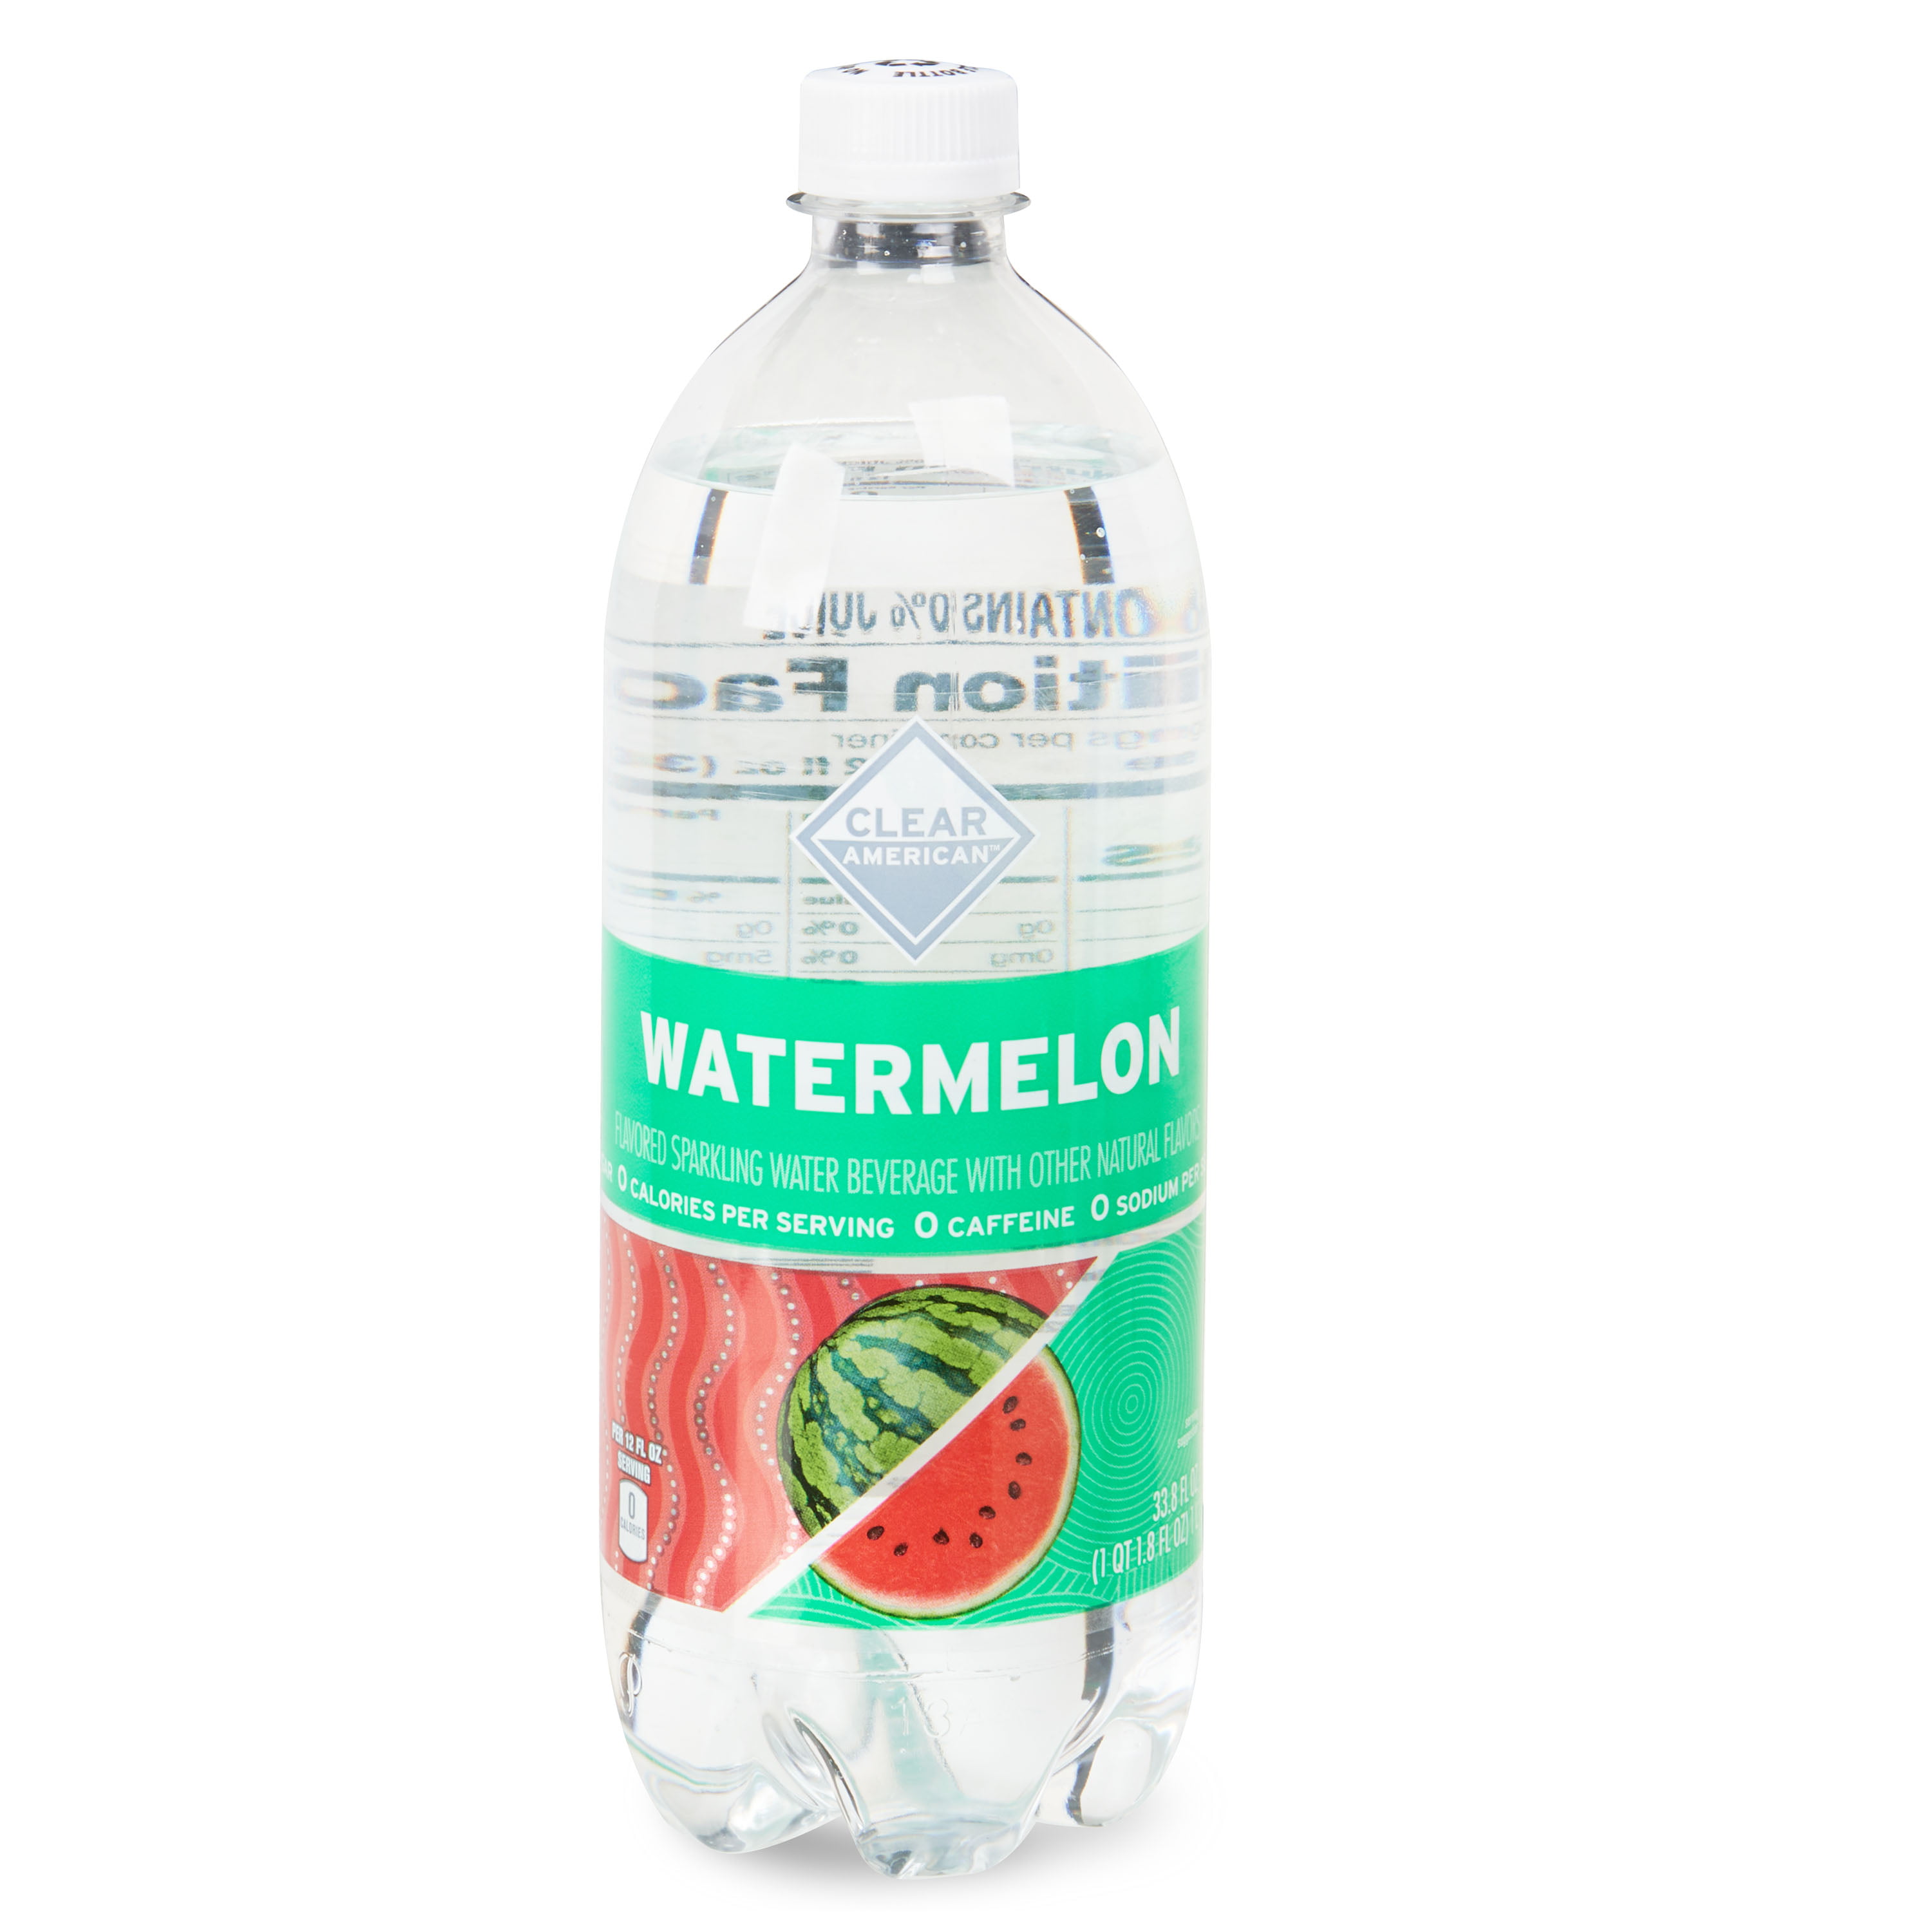 Clear American Watermelon Sparkling Water, 33.8 Fl Oz, Bottle - Walmart.com